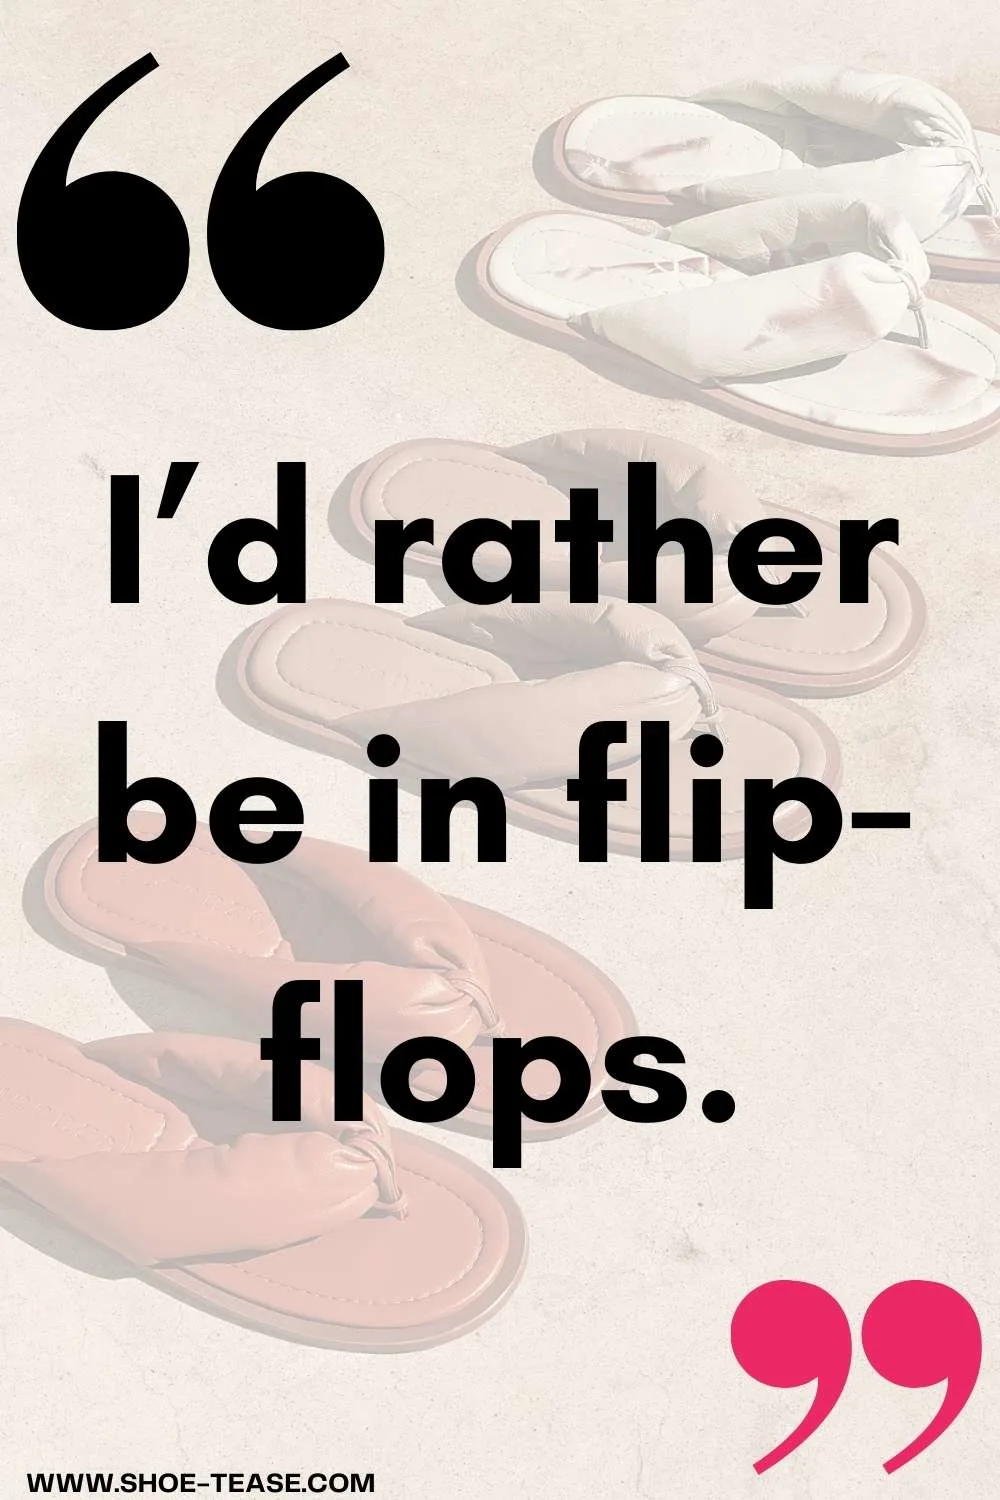 Flip flop quote reading I'd rather be in flip flops over flips flops on sand.